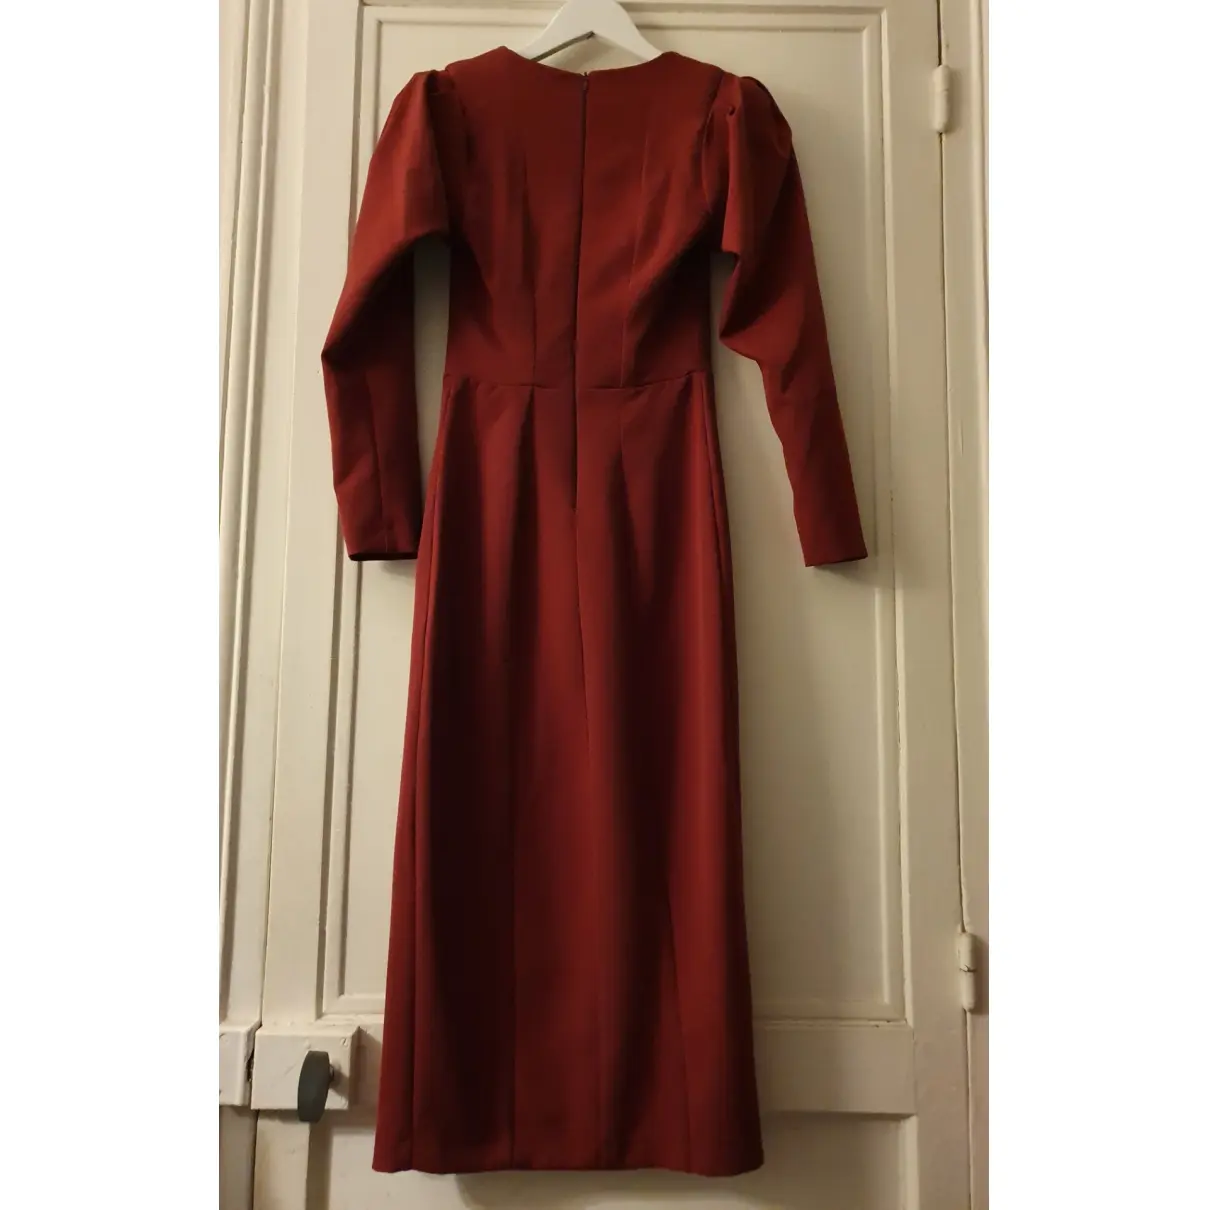 Buy Bimani Mid-length dress online